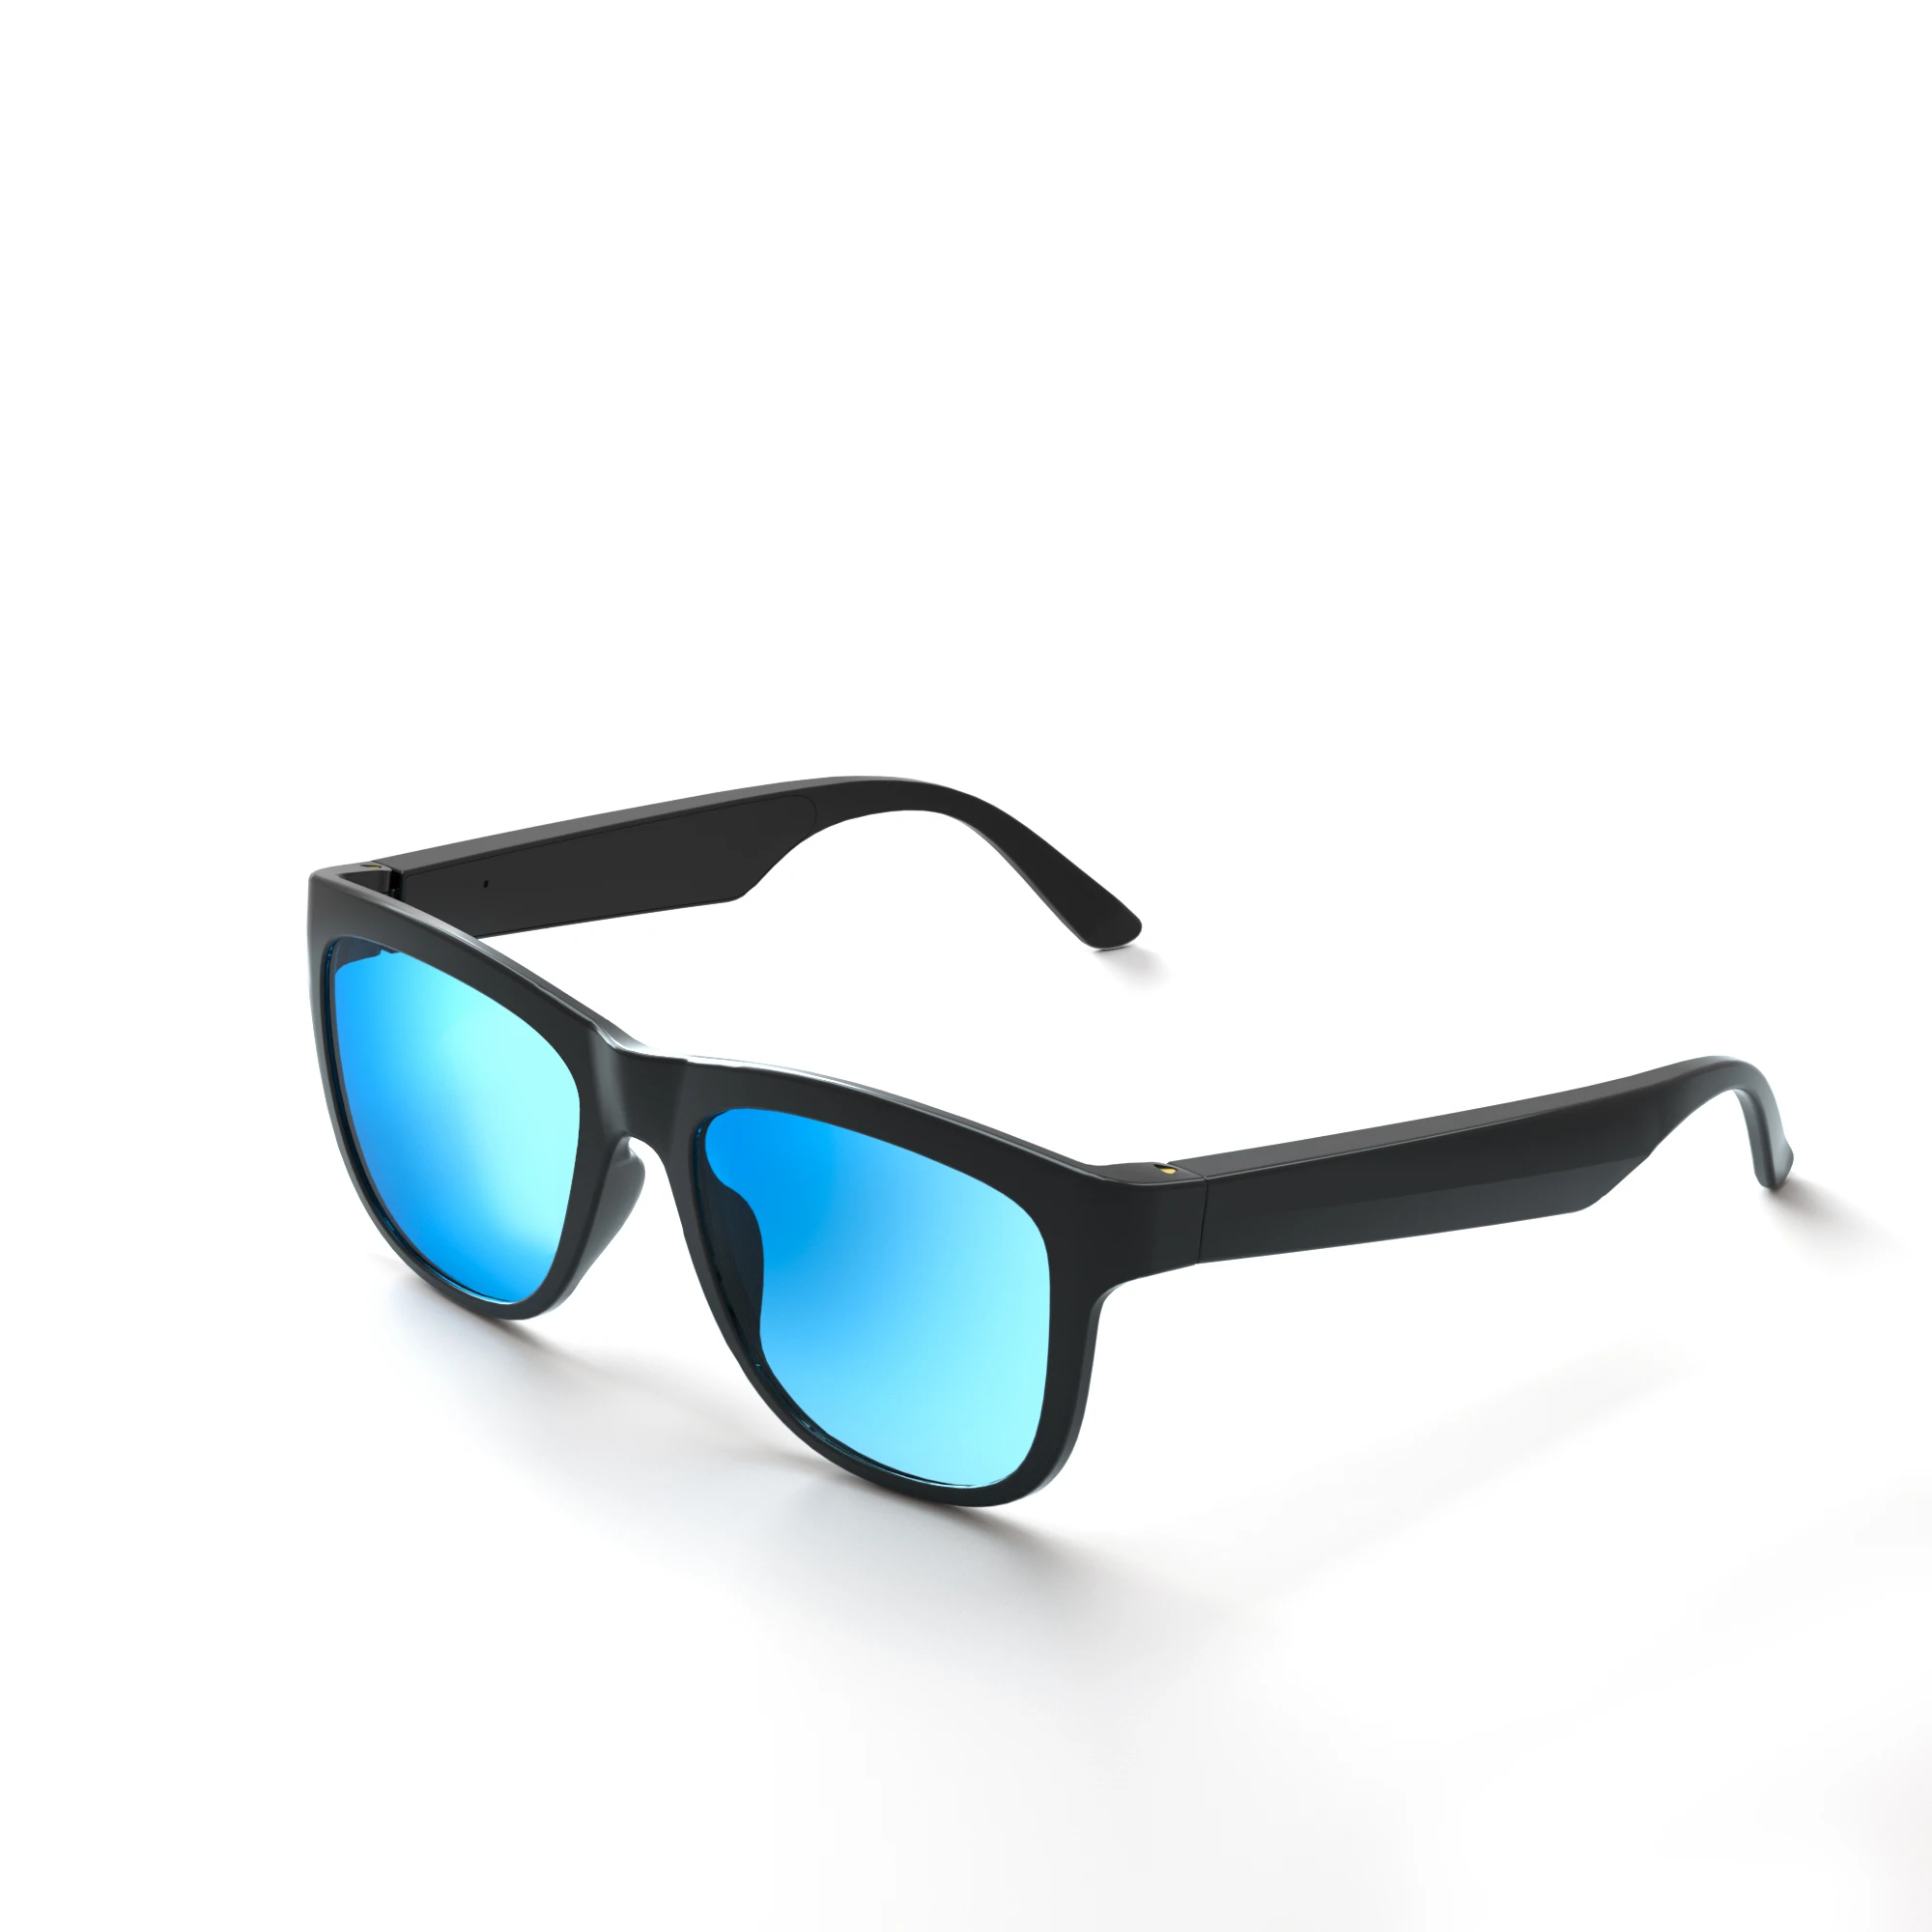 Shop Sports Sunglasses Online - Buy Best Prices